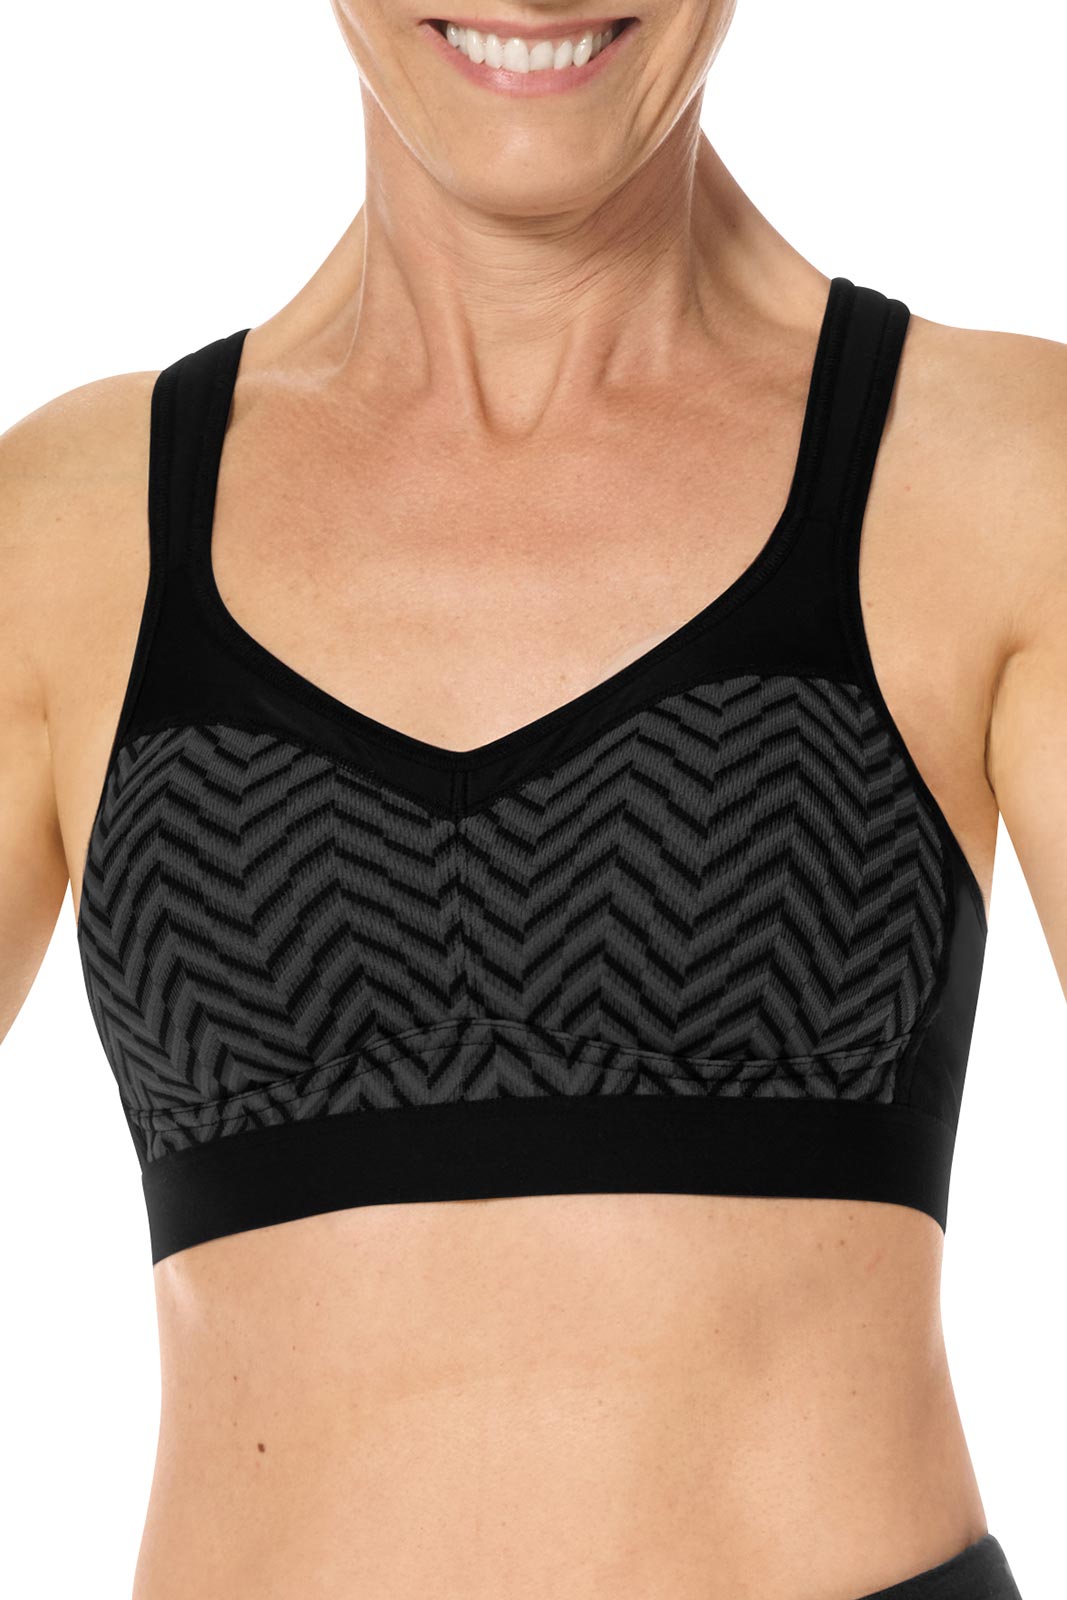 Amoena Marlena Wire-Free bra Soft Cup, Size 34D, Black Ref